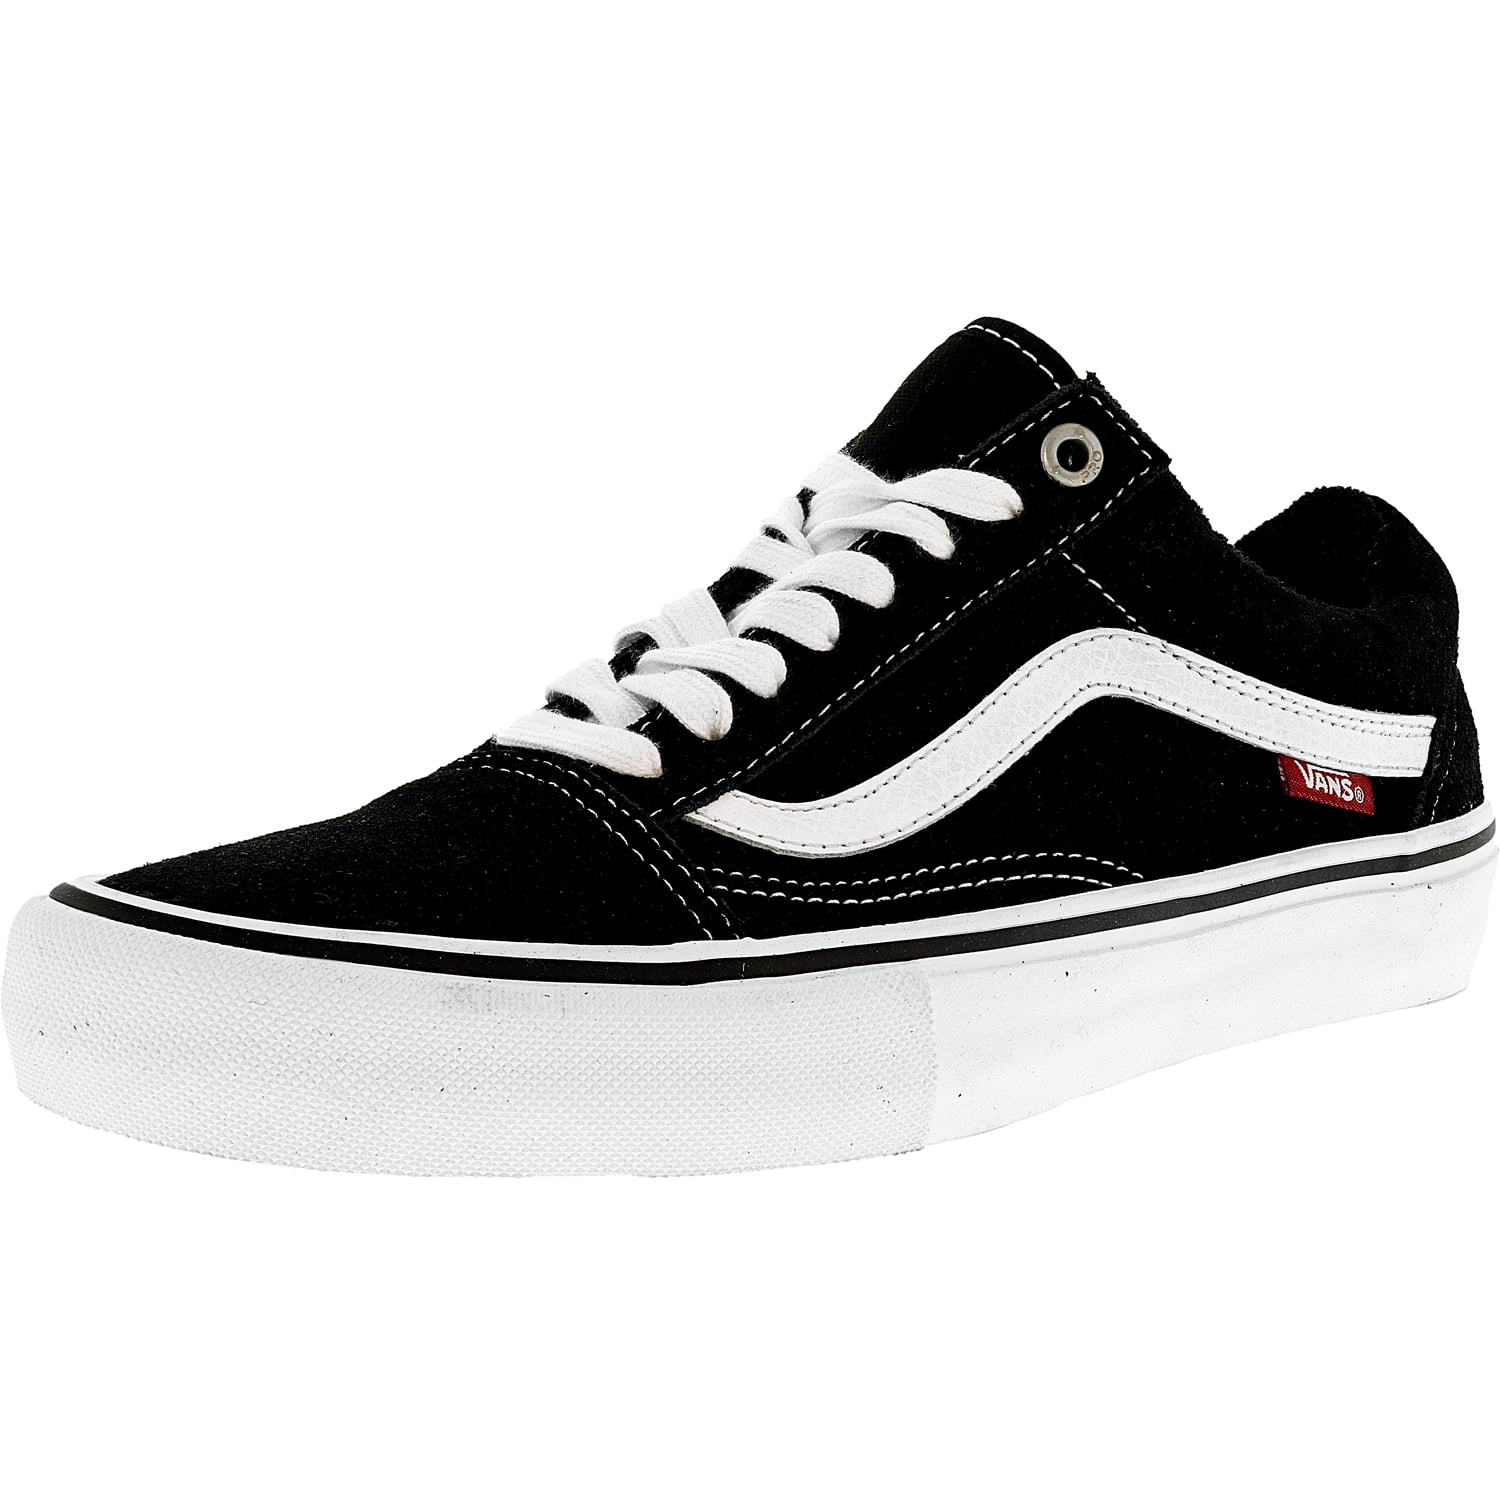 Vans Men's Old Skool Pro Black / White / Red Ankle-High Suede